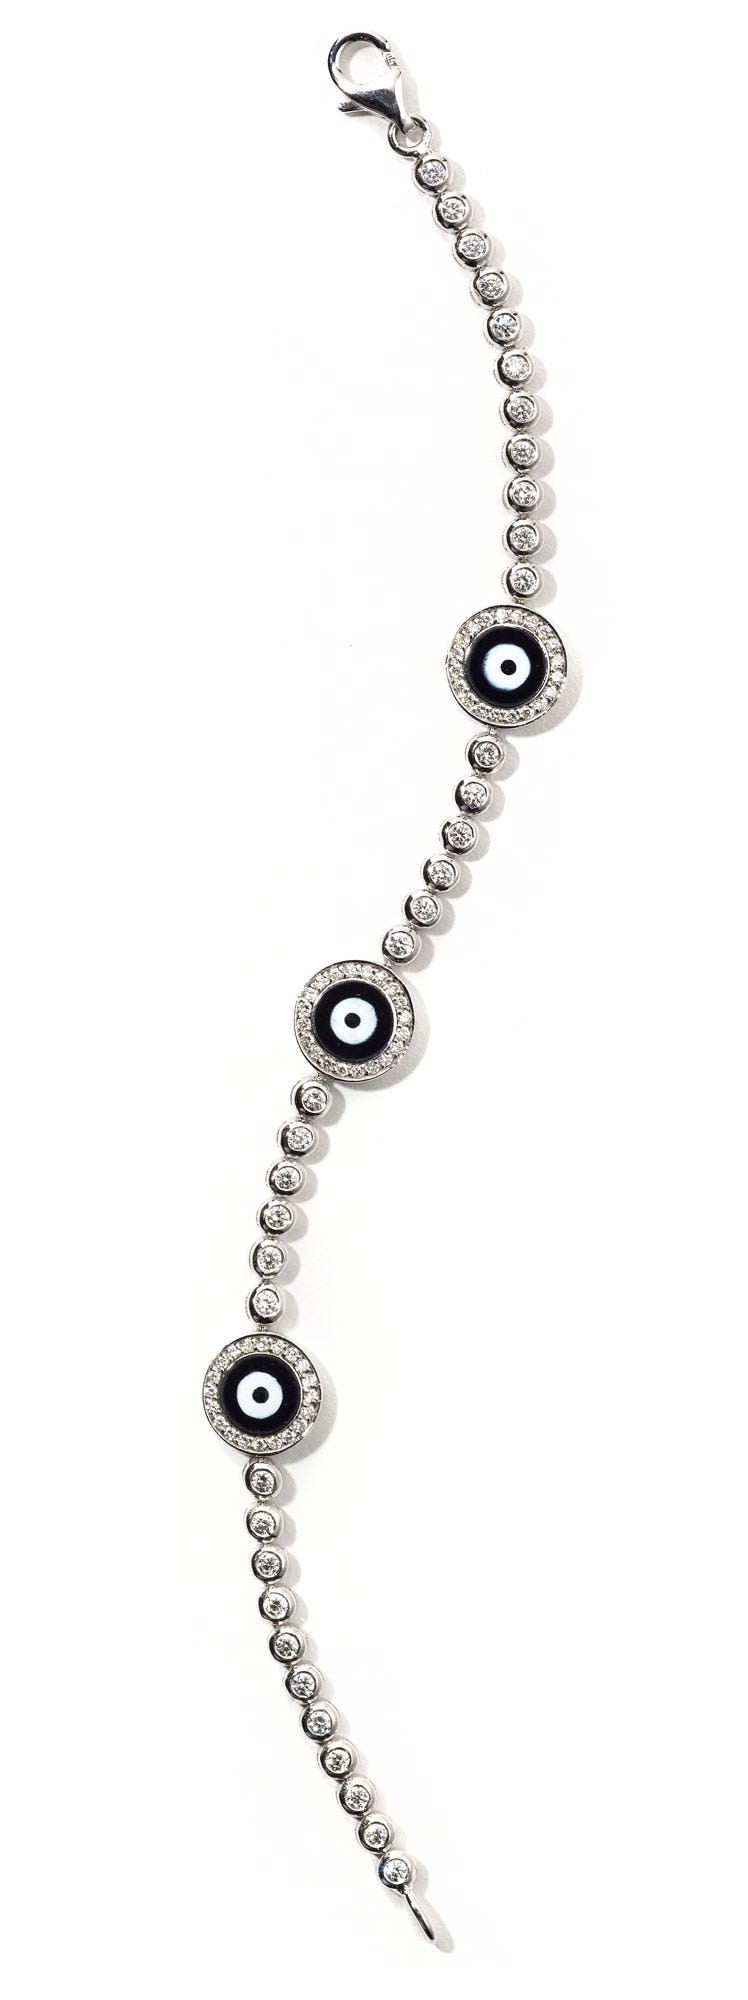 Aaron Basha gold, enamel, and diamond bracelet, $12,800, aaronbasha.com.